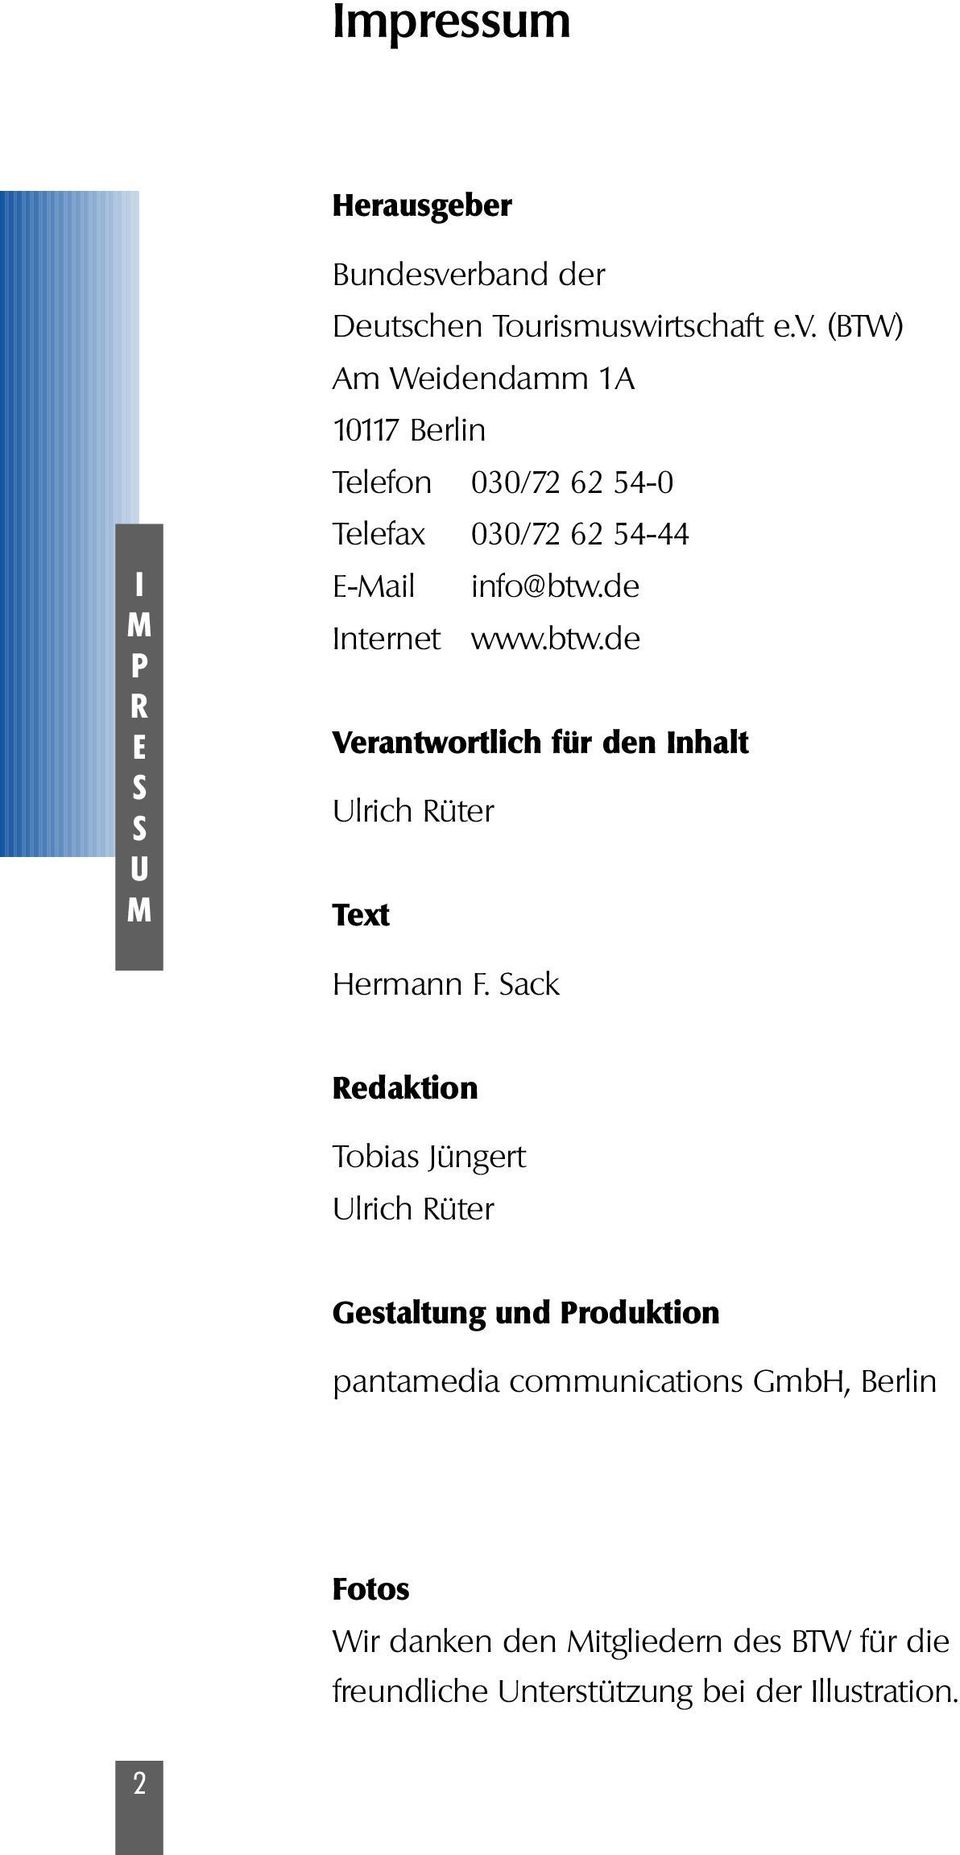 (BW) m Weidendamm 1 10117 Berlin elefon 030/72 62 54-0 elefax 030/72 62 54-44 -Mail info@btw.